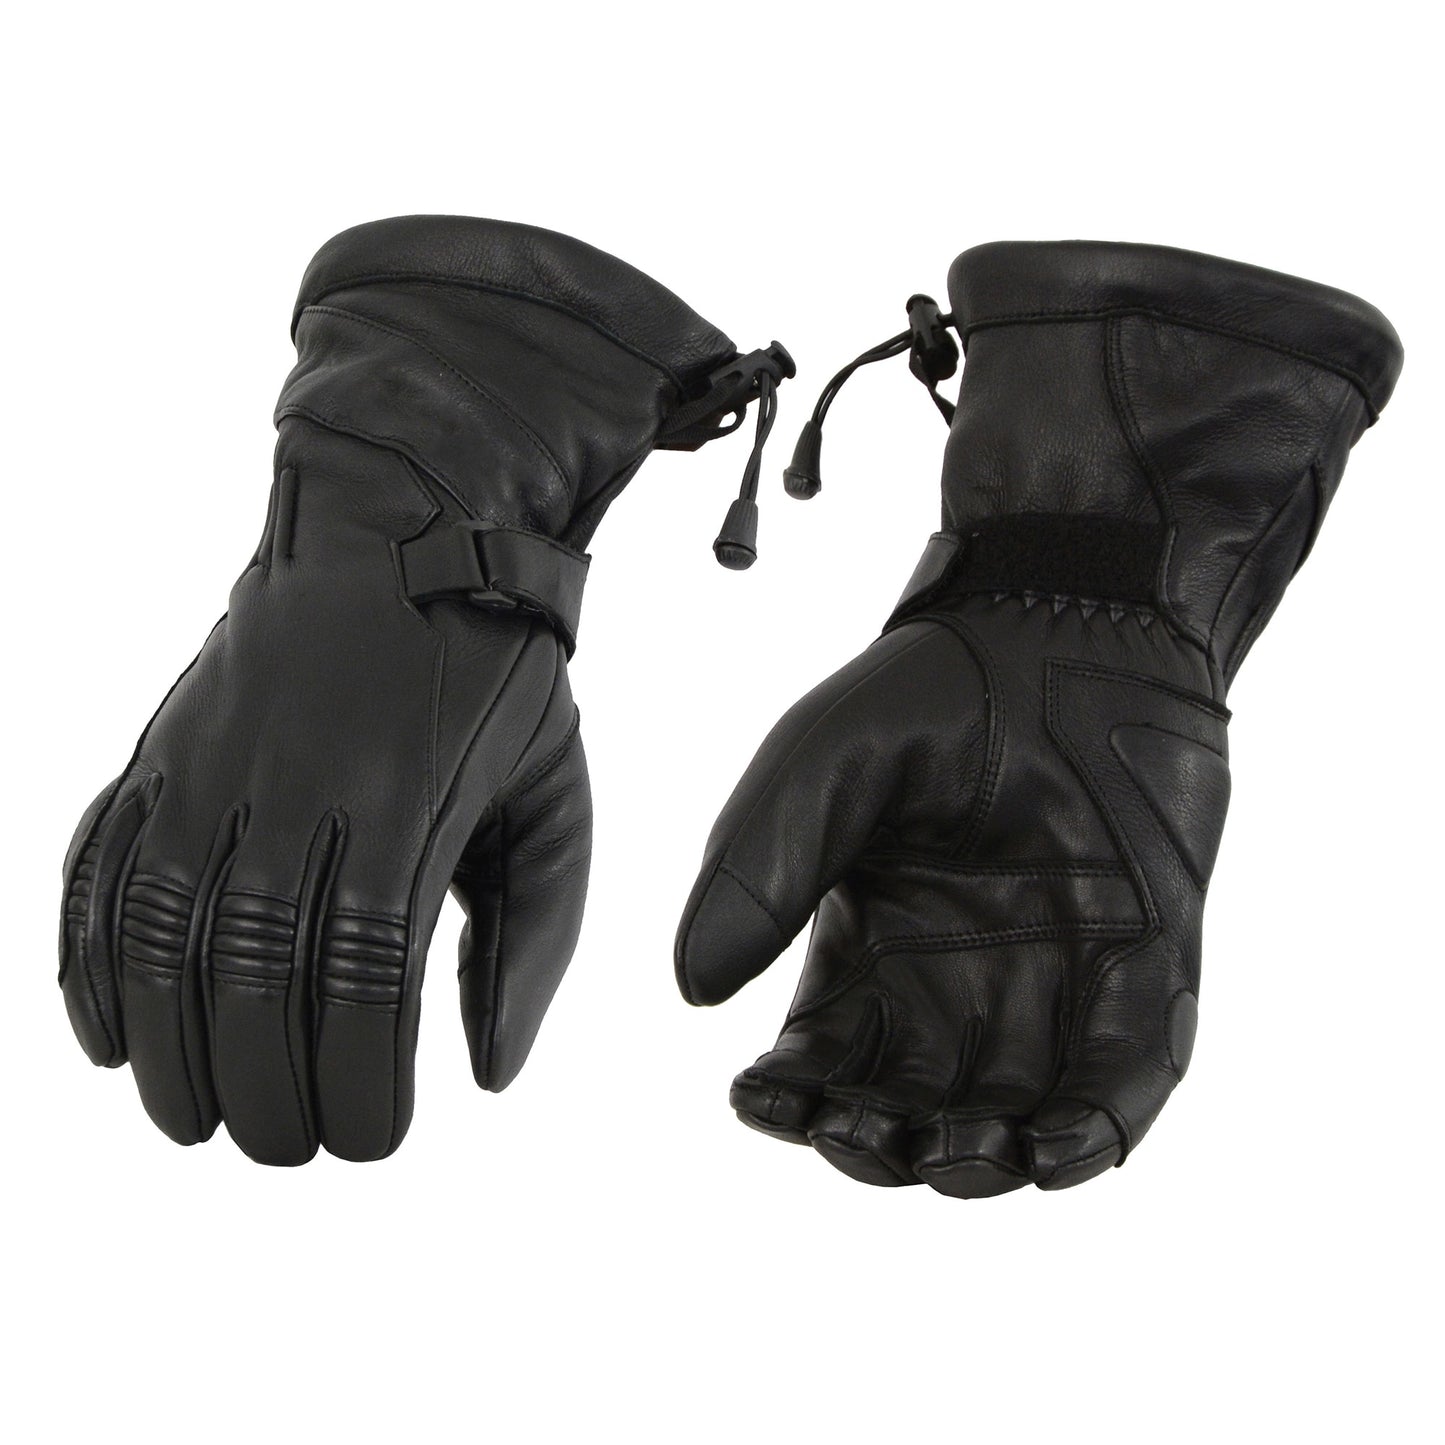 Gloves (MG7518) - Men’s Deerskin Leather Gauntlet Gloves with Draw String